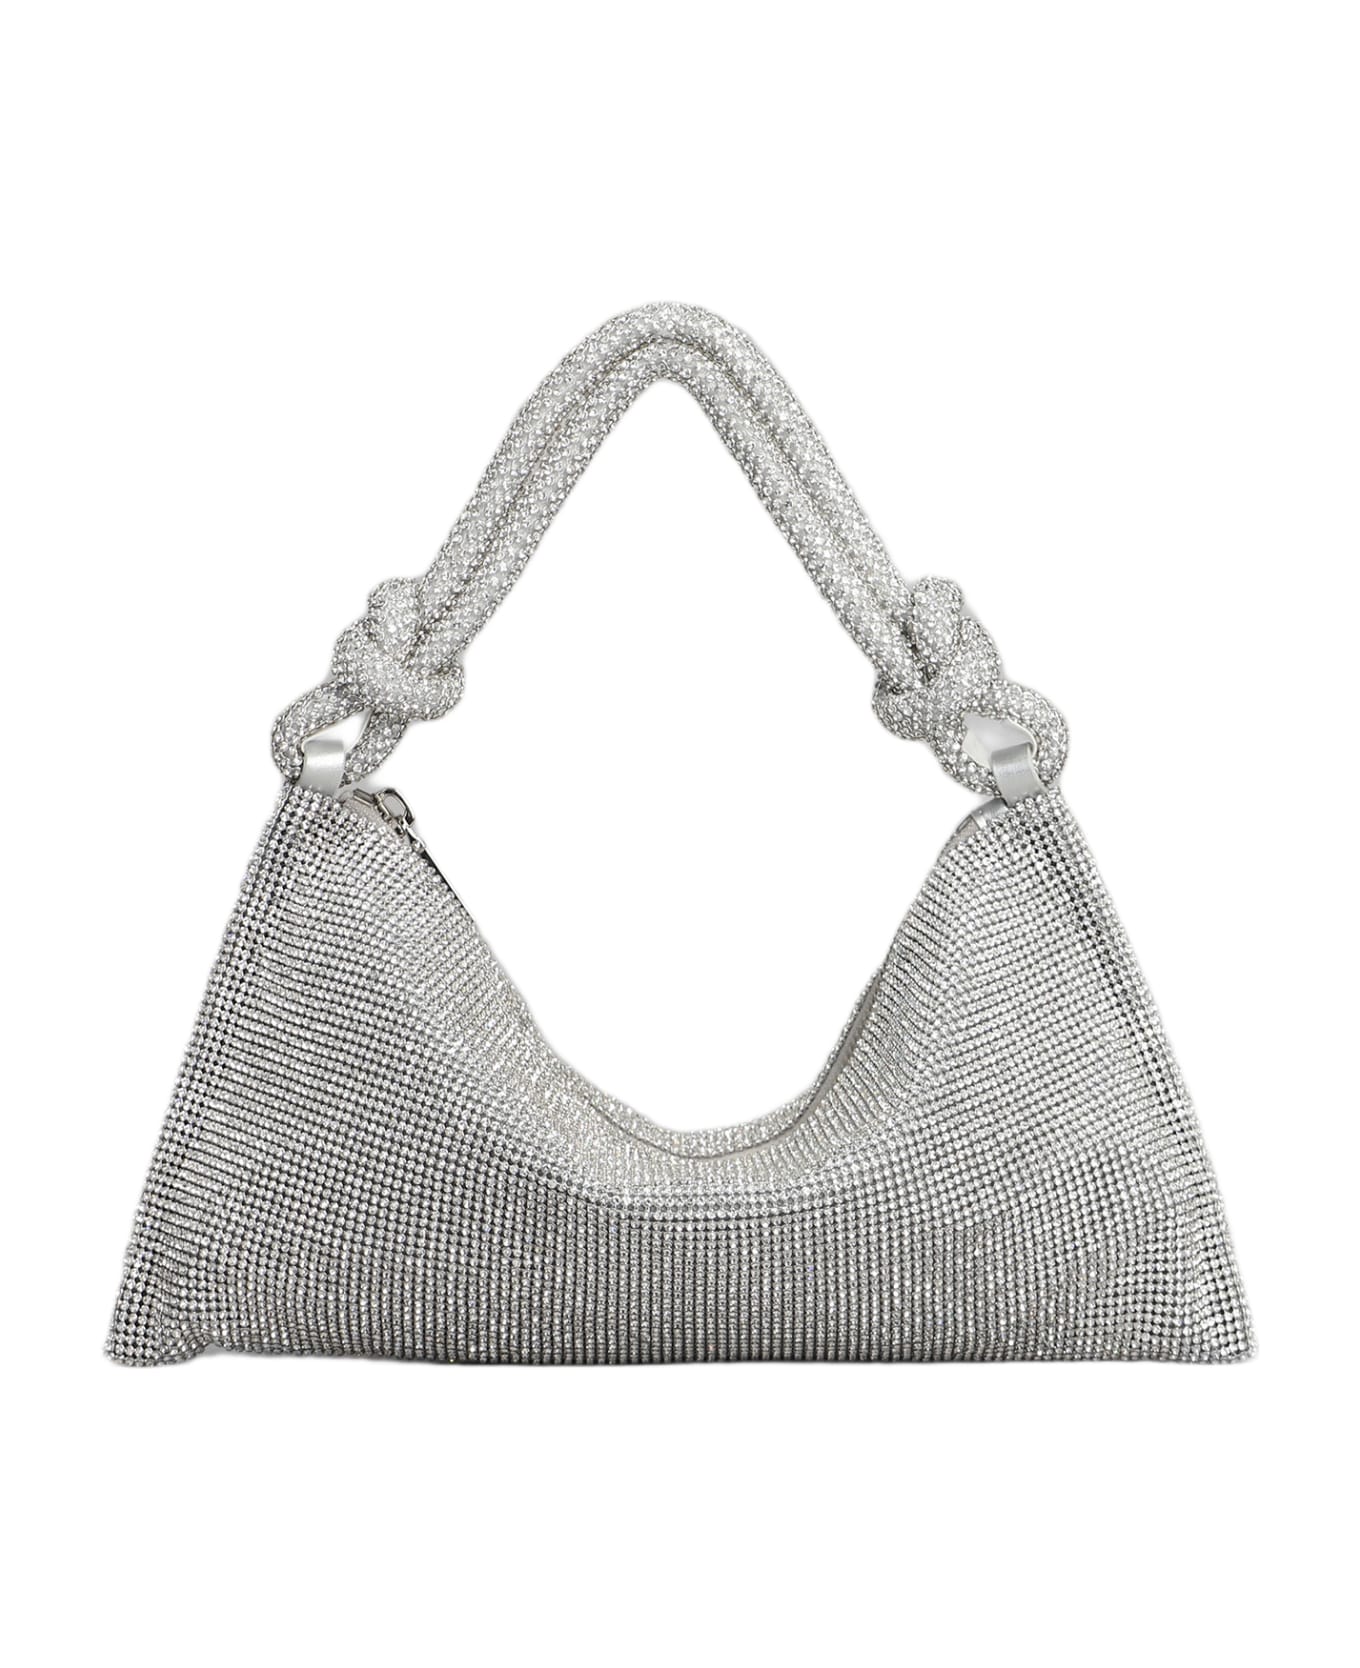 Cult Gaia Hera Nano Hand Bag In Silver Pvc - silver